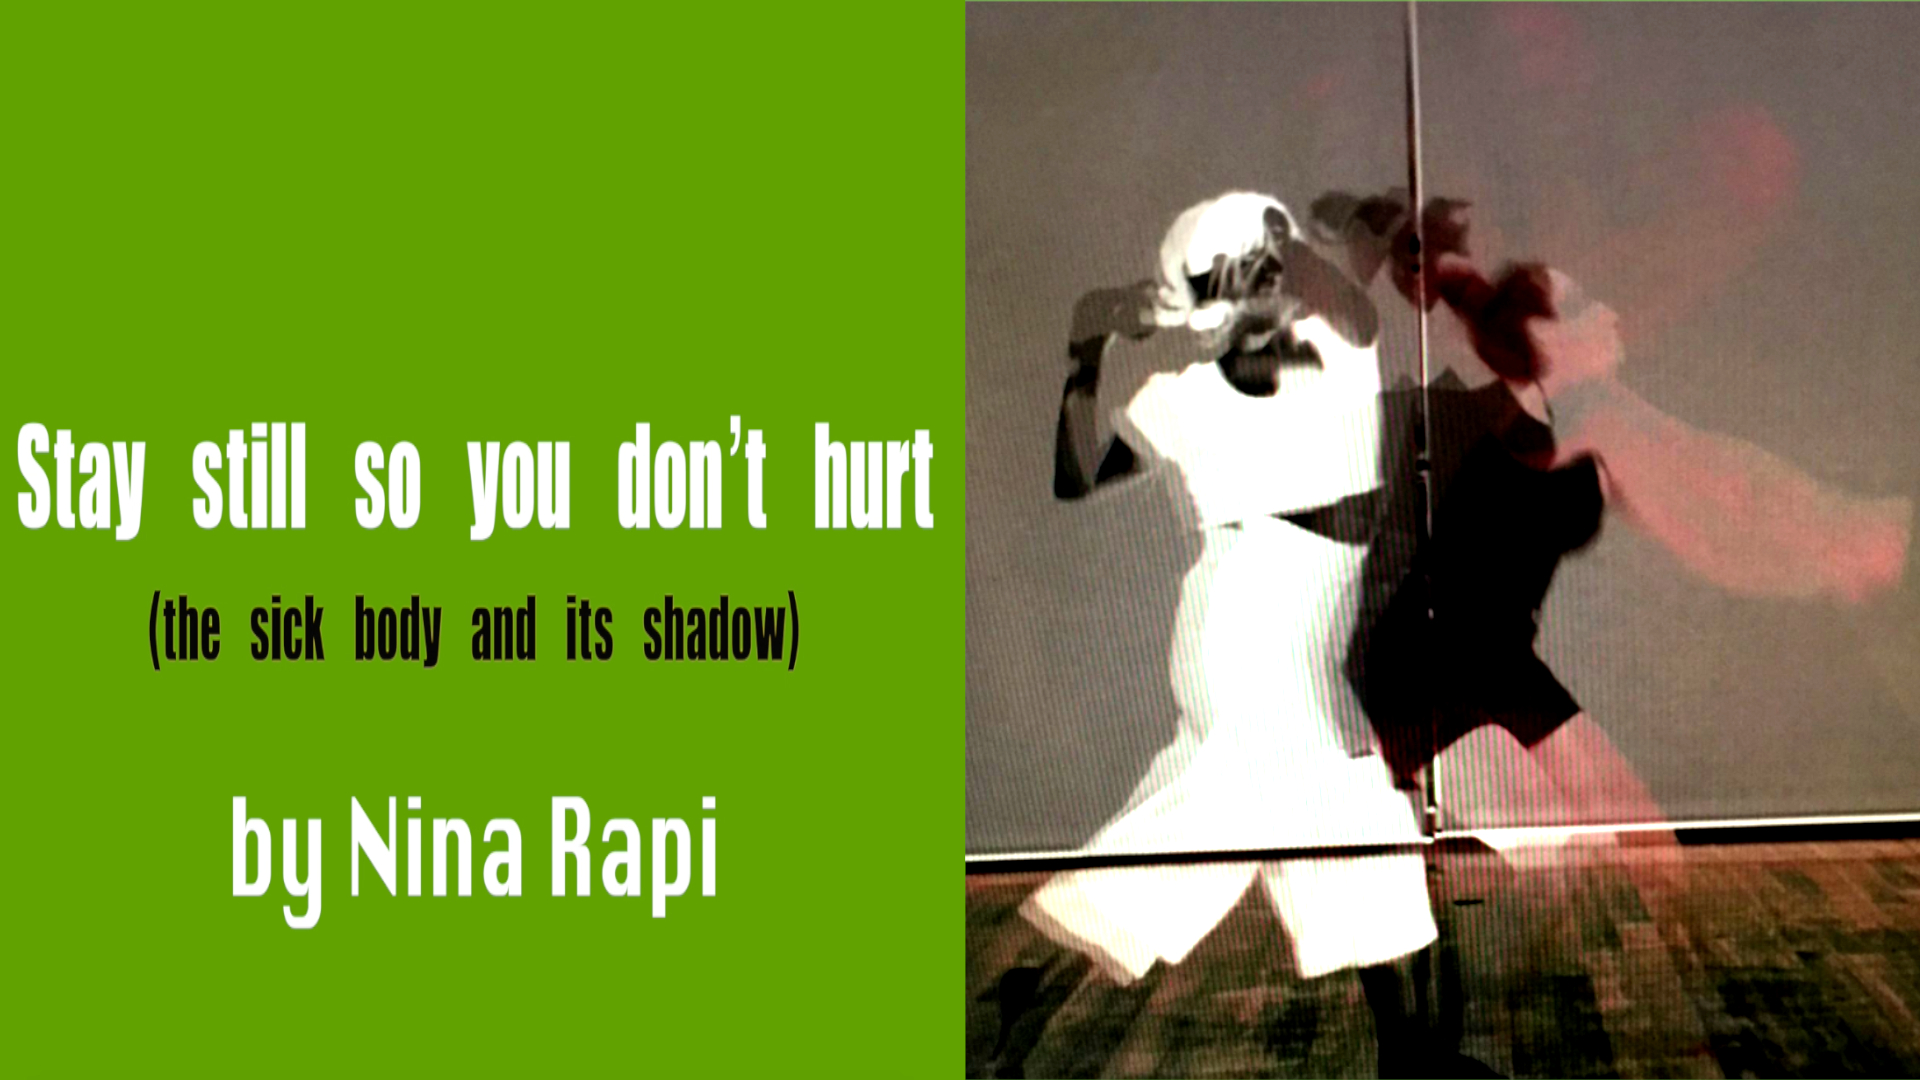 STAY STILL SO YOU DON’T HURT By Nina Rapi